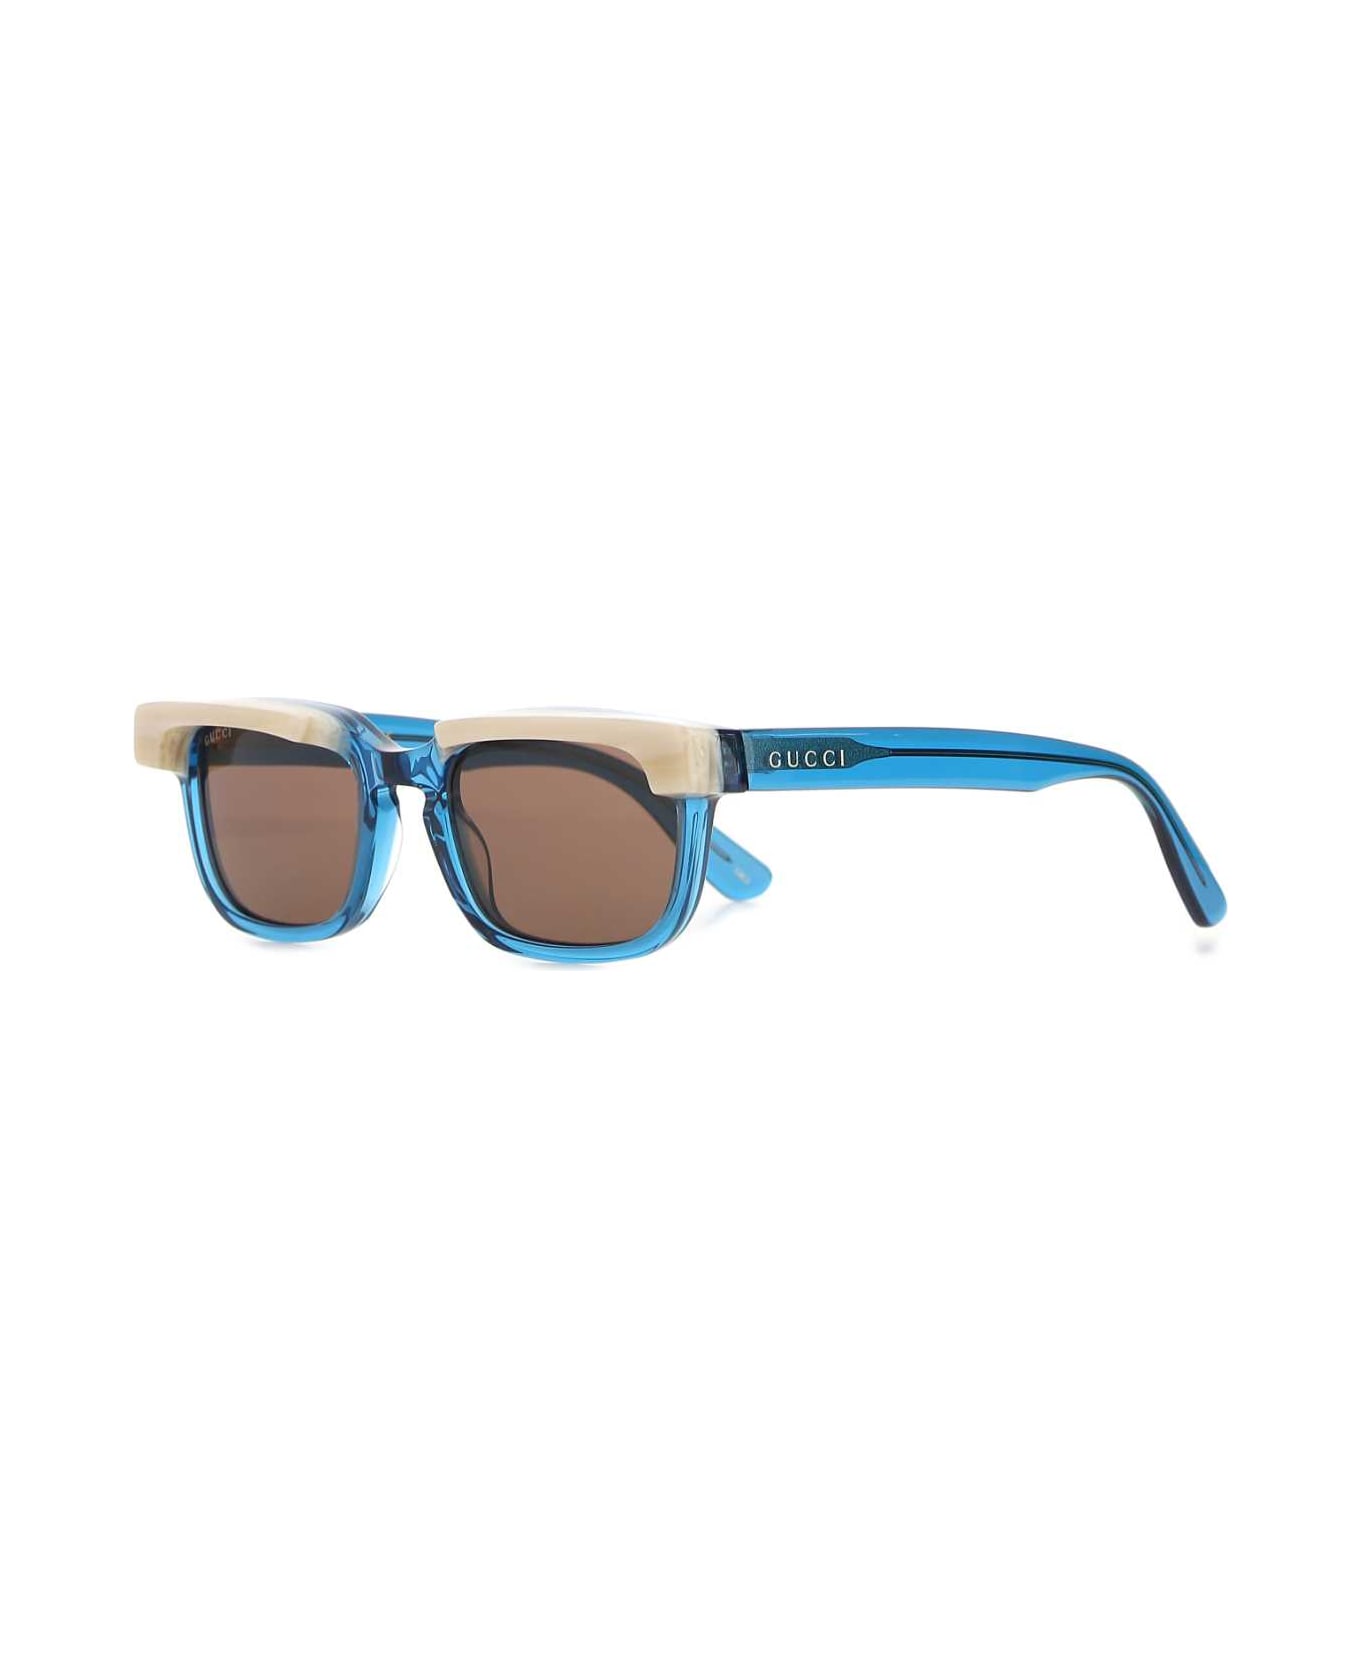 Gucci Light Blue Acetate Sunglasses - 4623